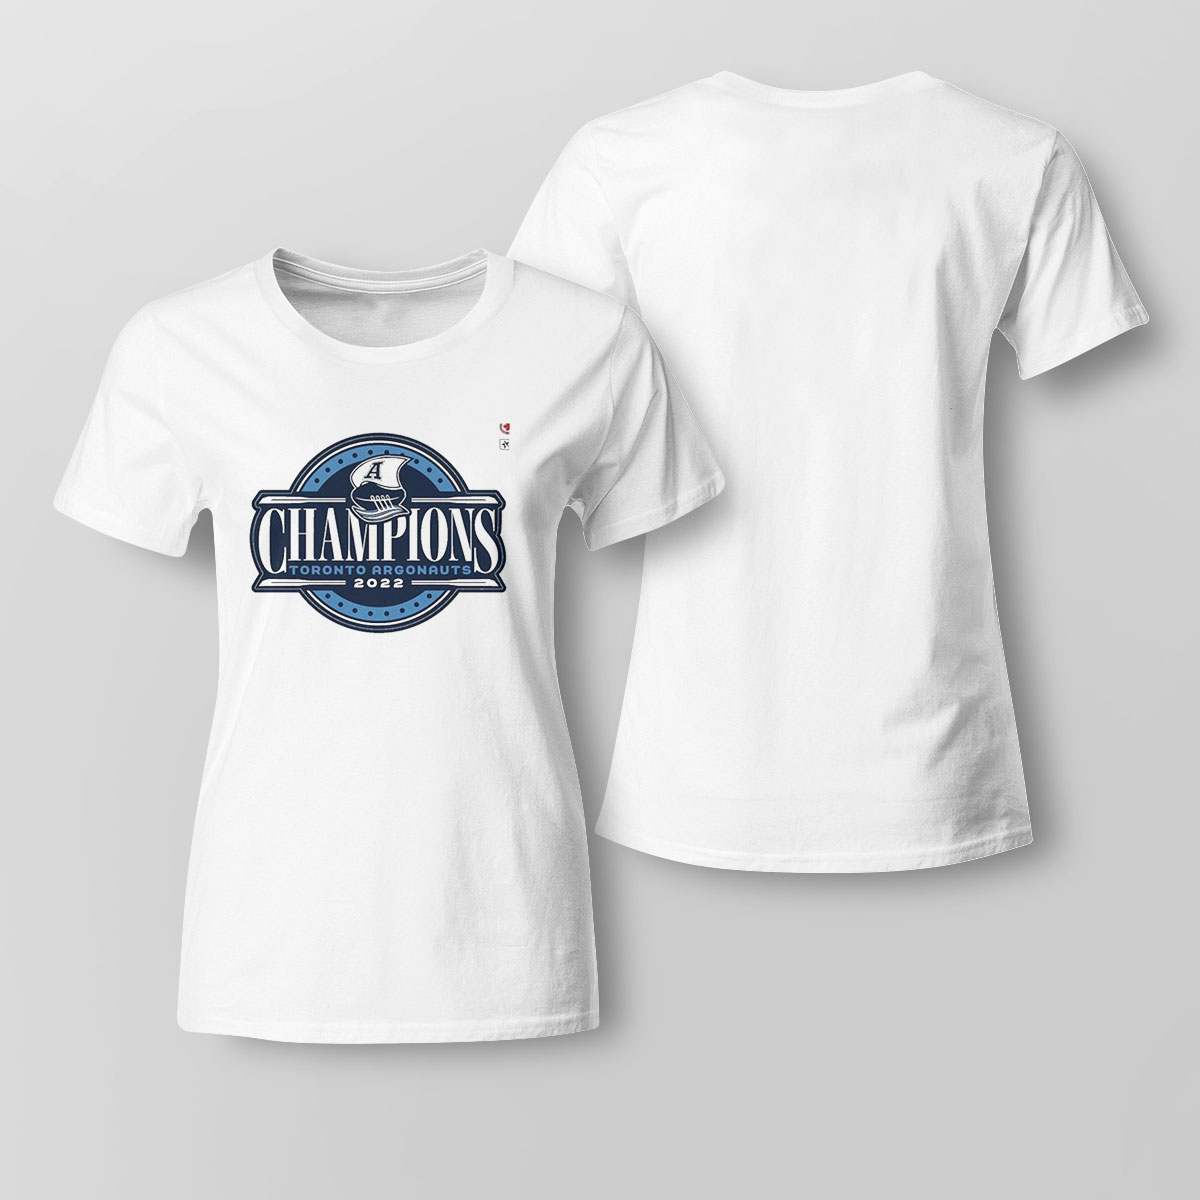 2022 Toronto Argonauts Argos Grey Cup Champions Shirt